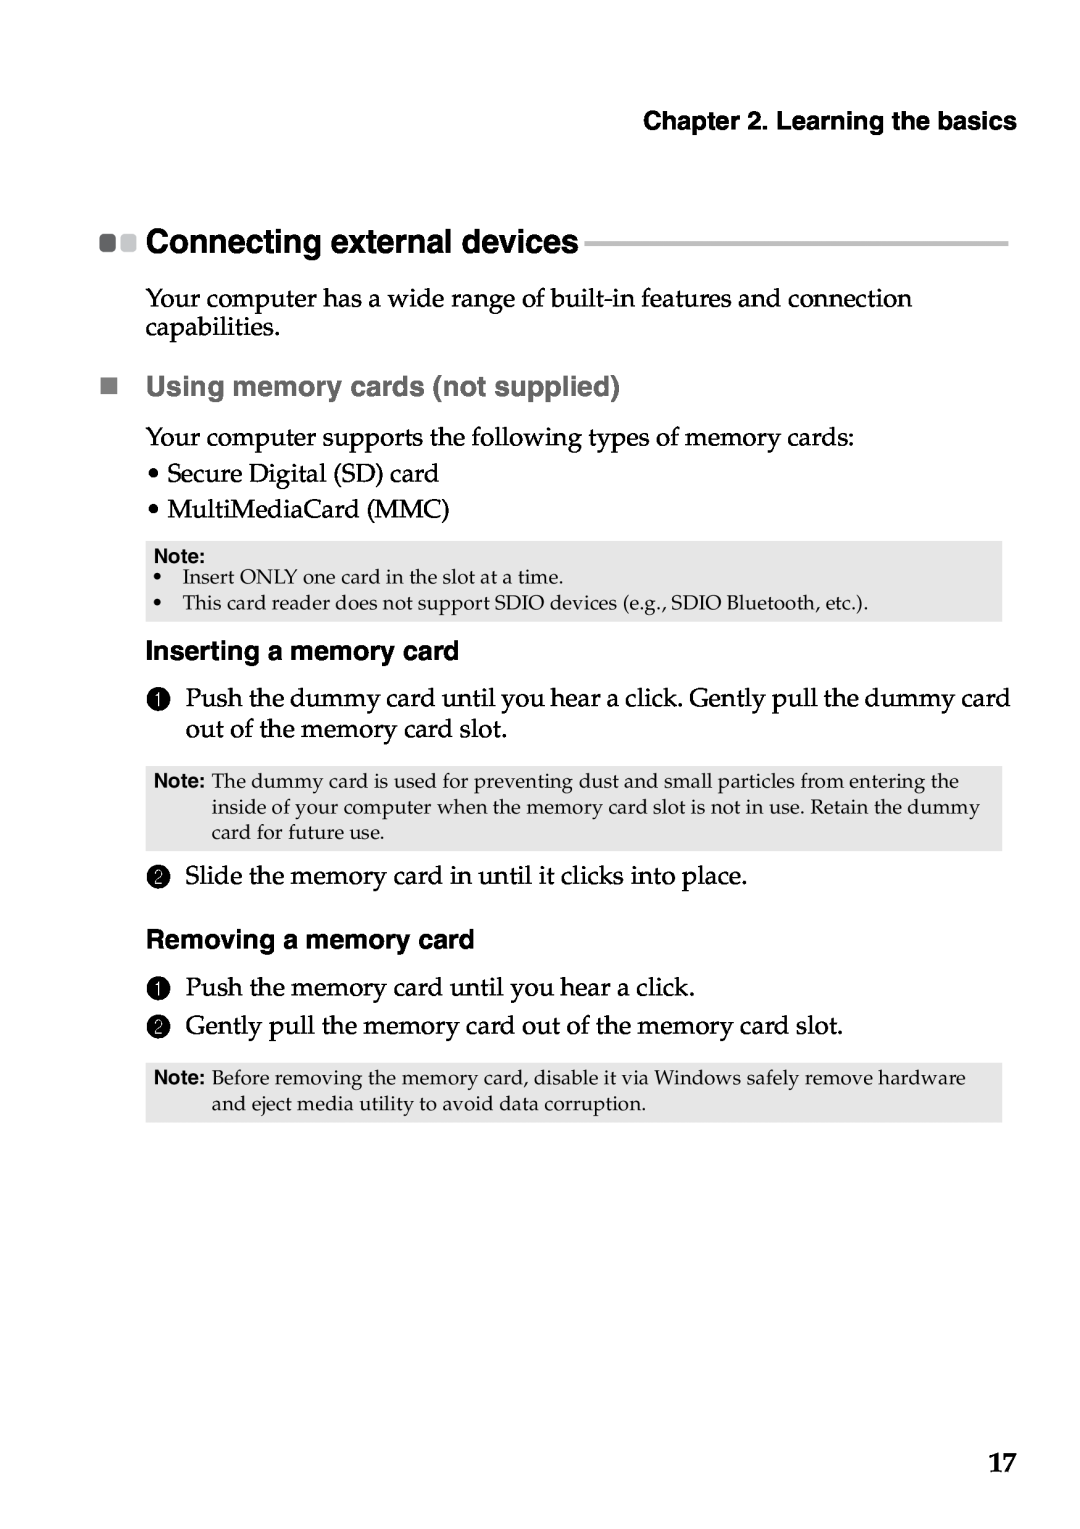 Lenovo U410, U310 „ Using memory cards not supplied, Inserting a memory card, Removing a memory card, Learning the basics 